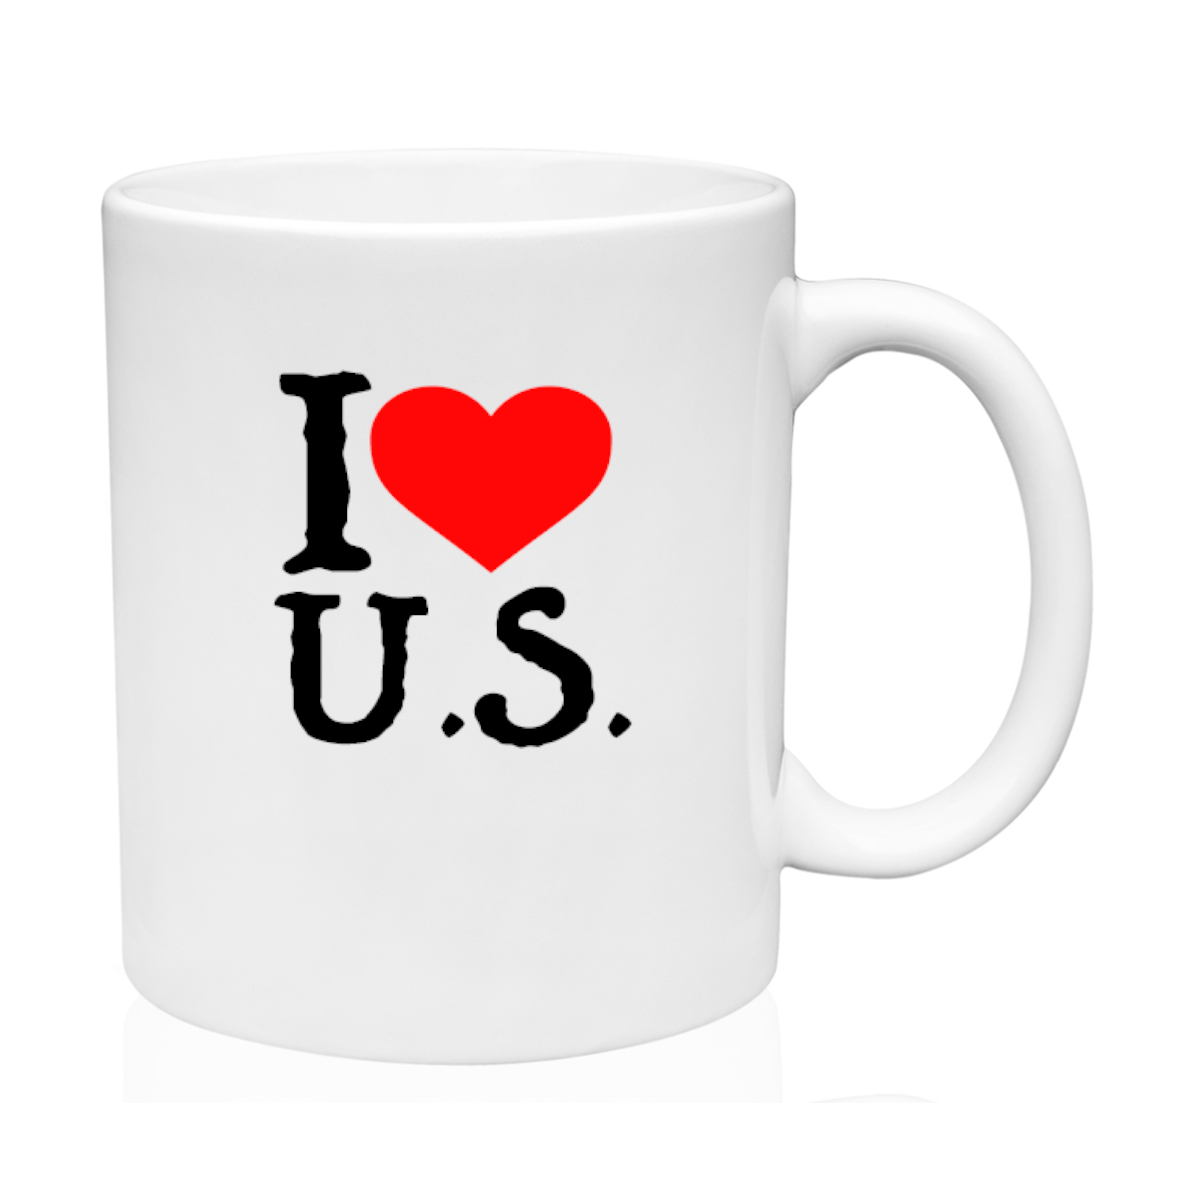 AGAD Turista (I Love USA Ceramic Mug)